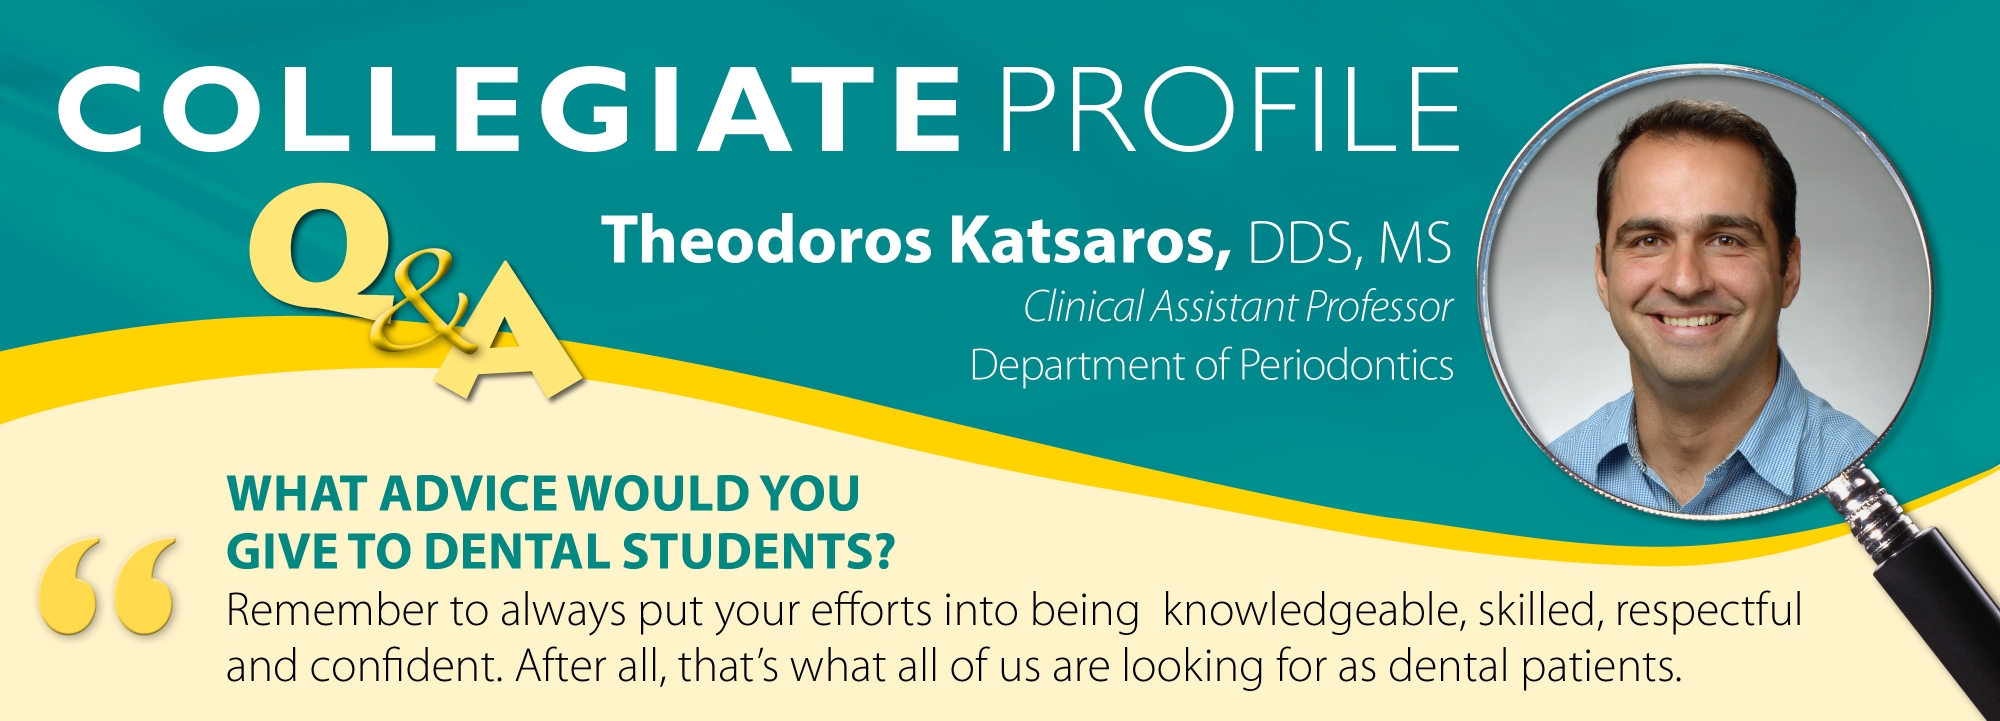 collegiate profile Katsaros